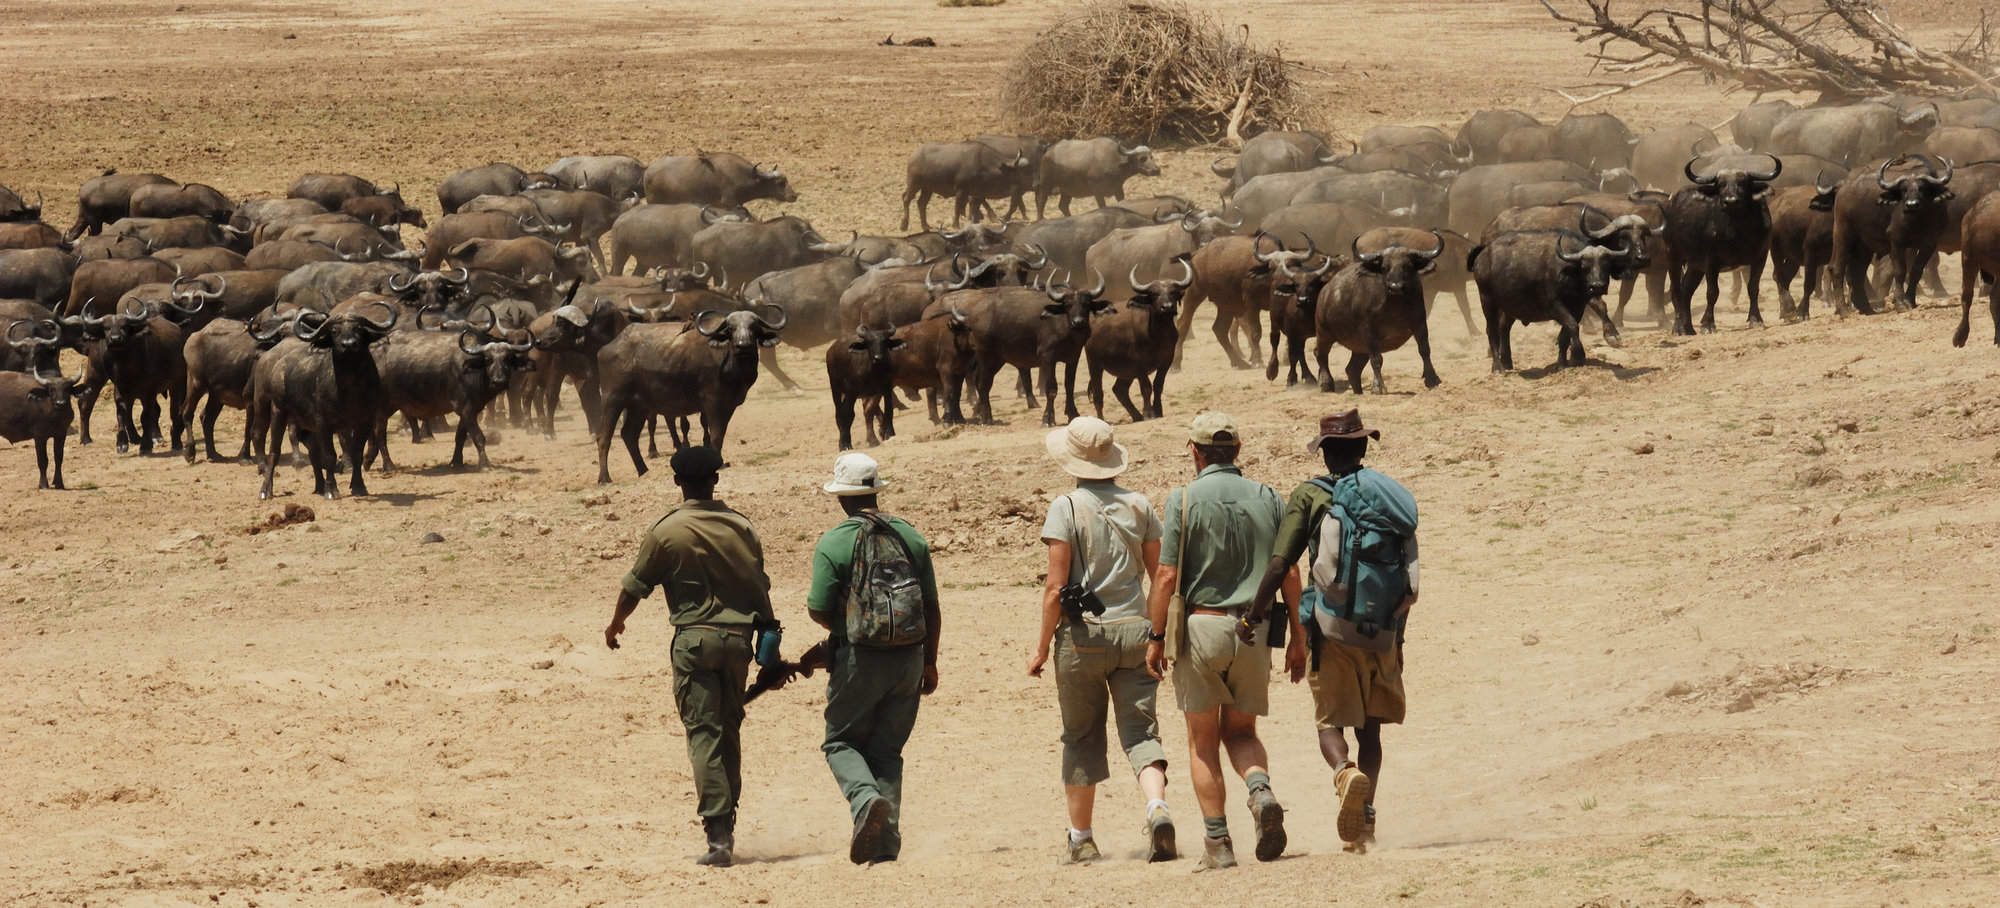 zambia walking safari